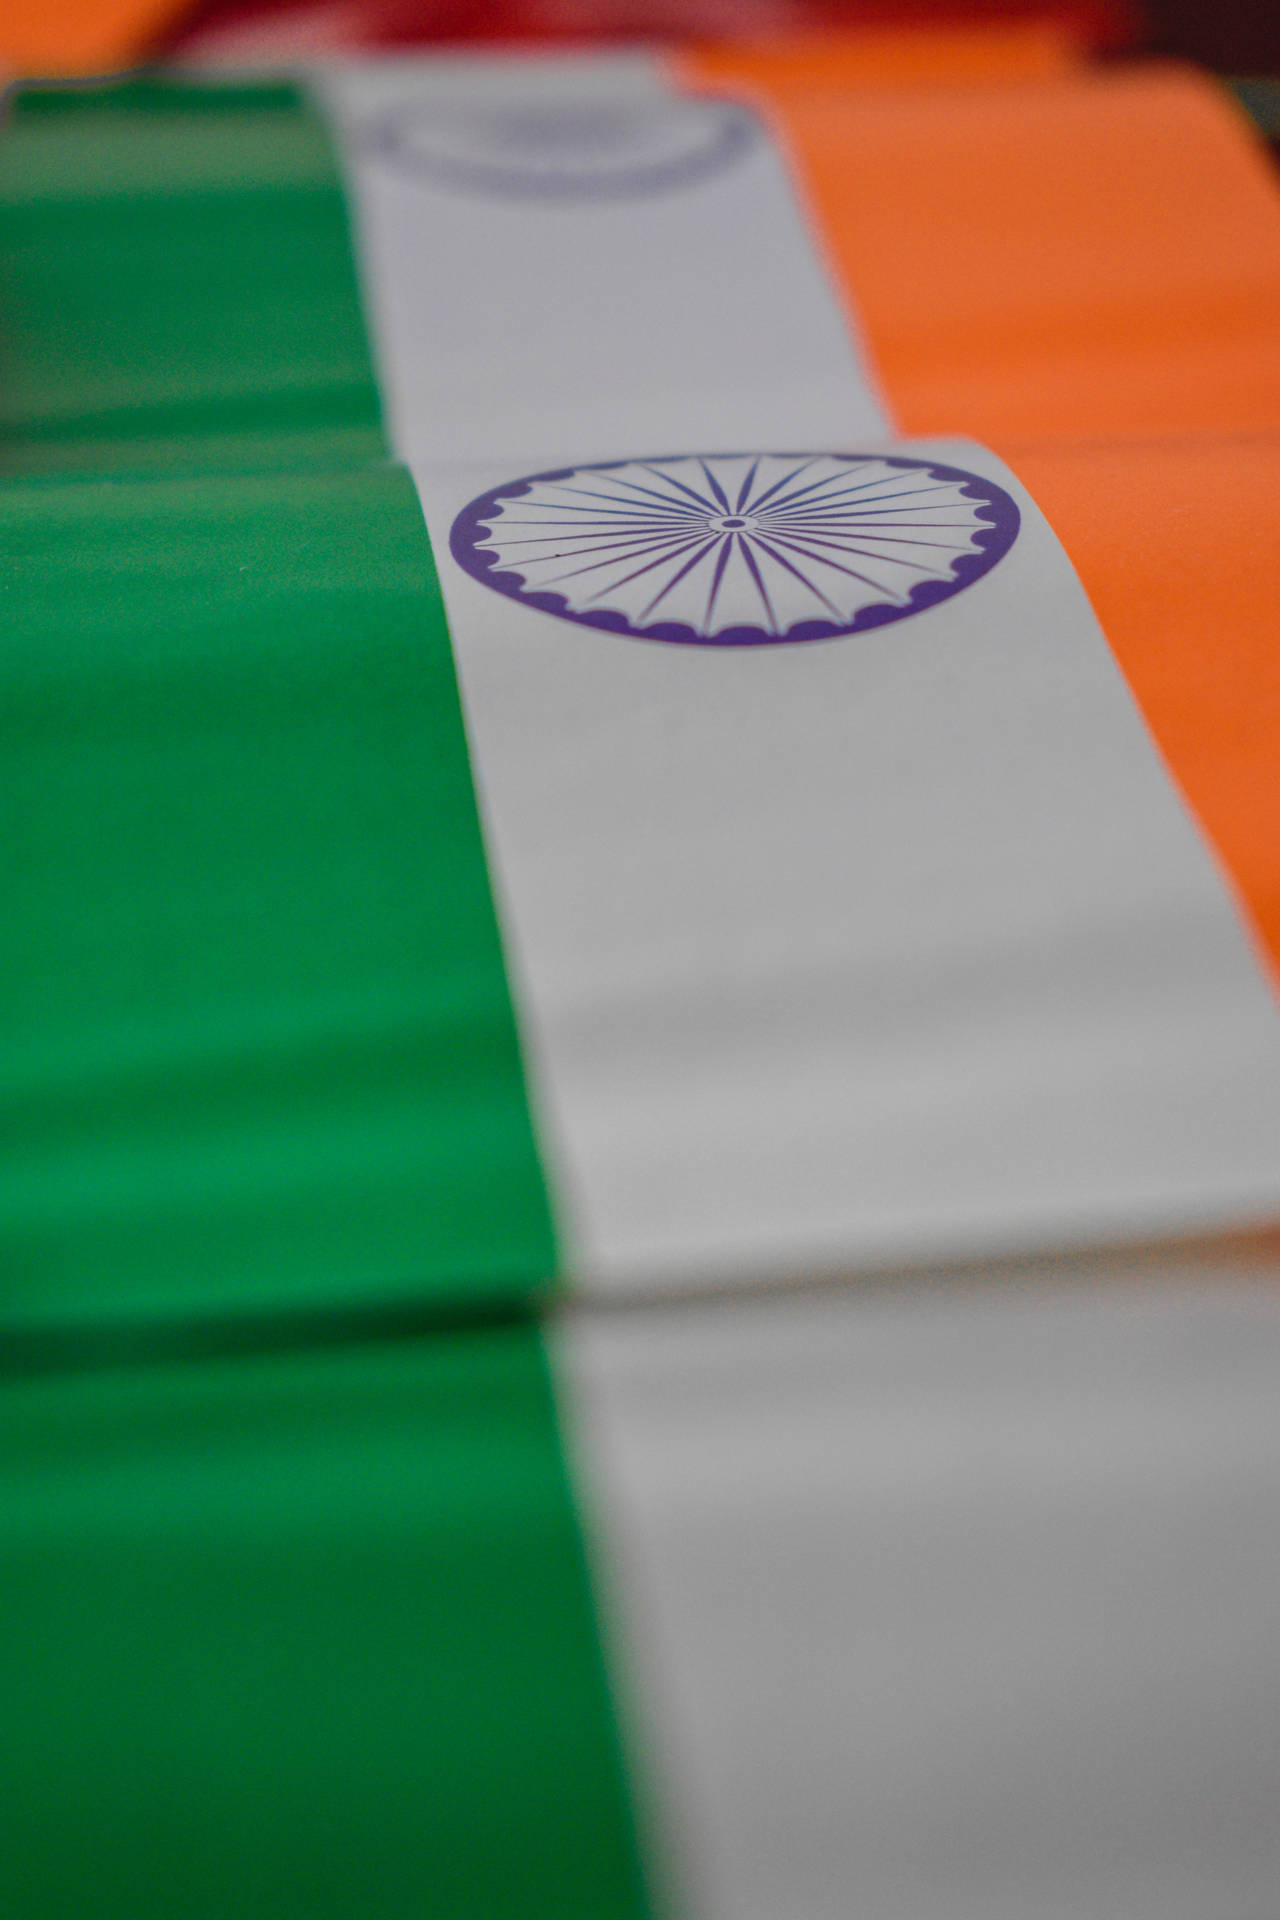 Triple Colours Of Indian Flag 4k Wallpaper